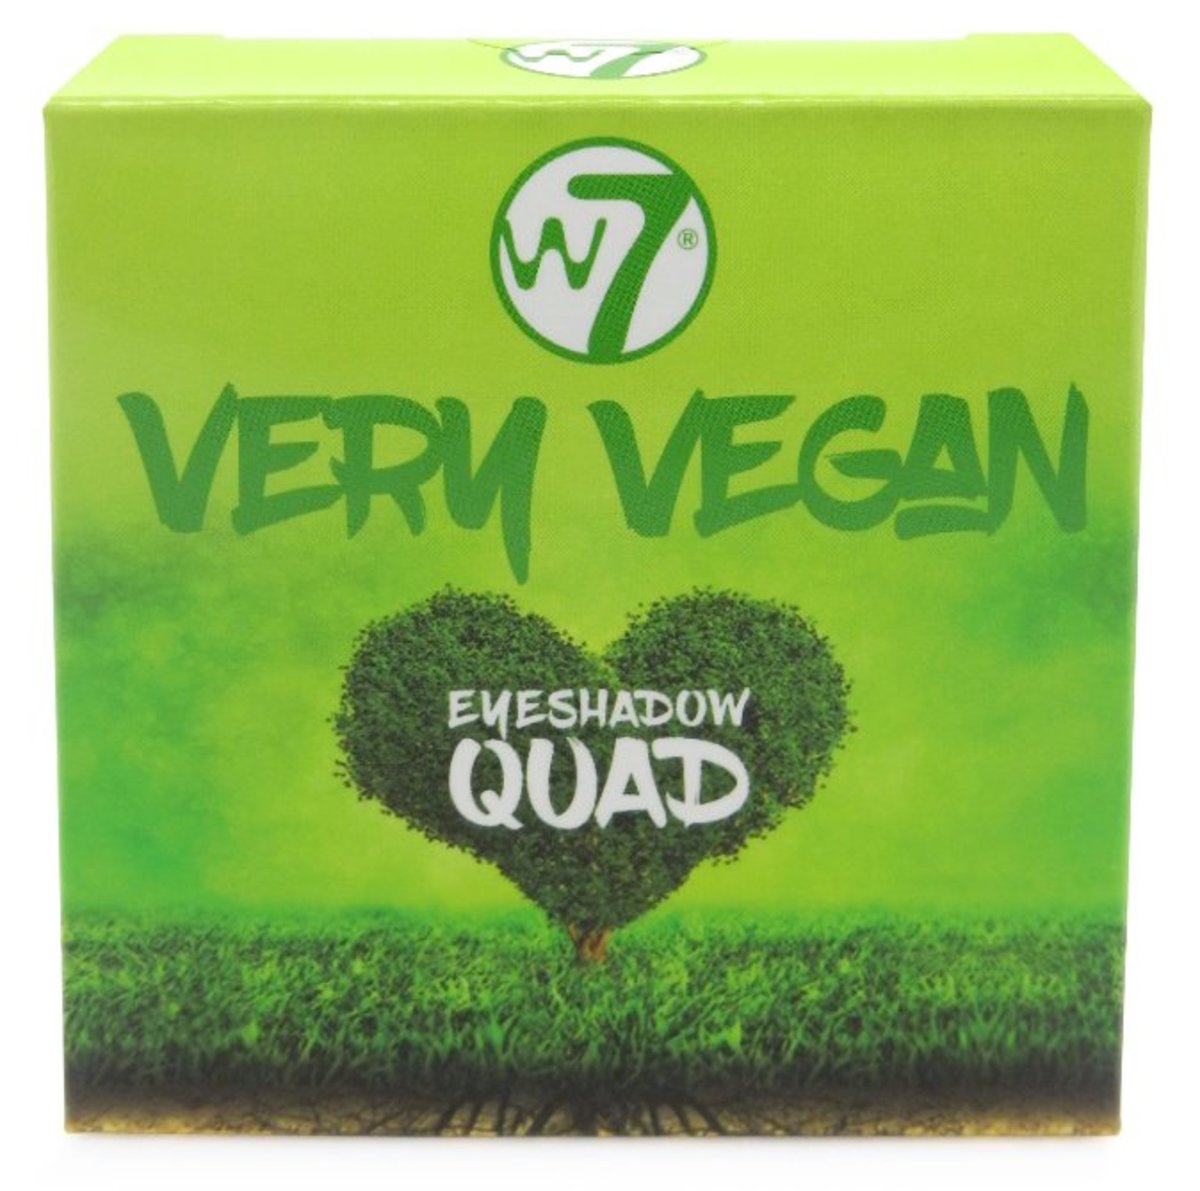 Very Vegan Eyeshadow Quad - Summer Sands